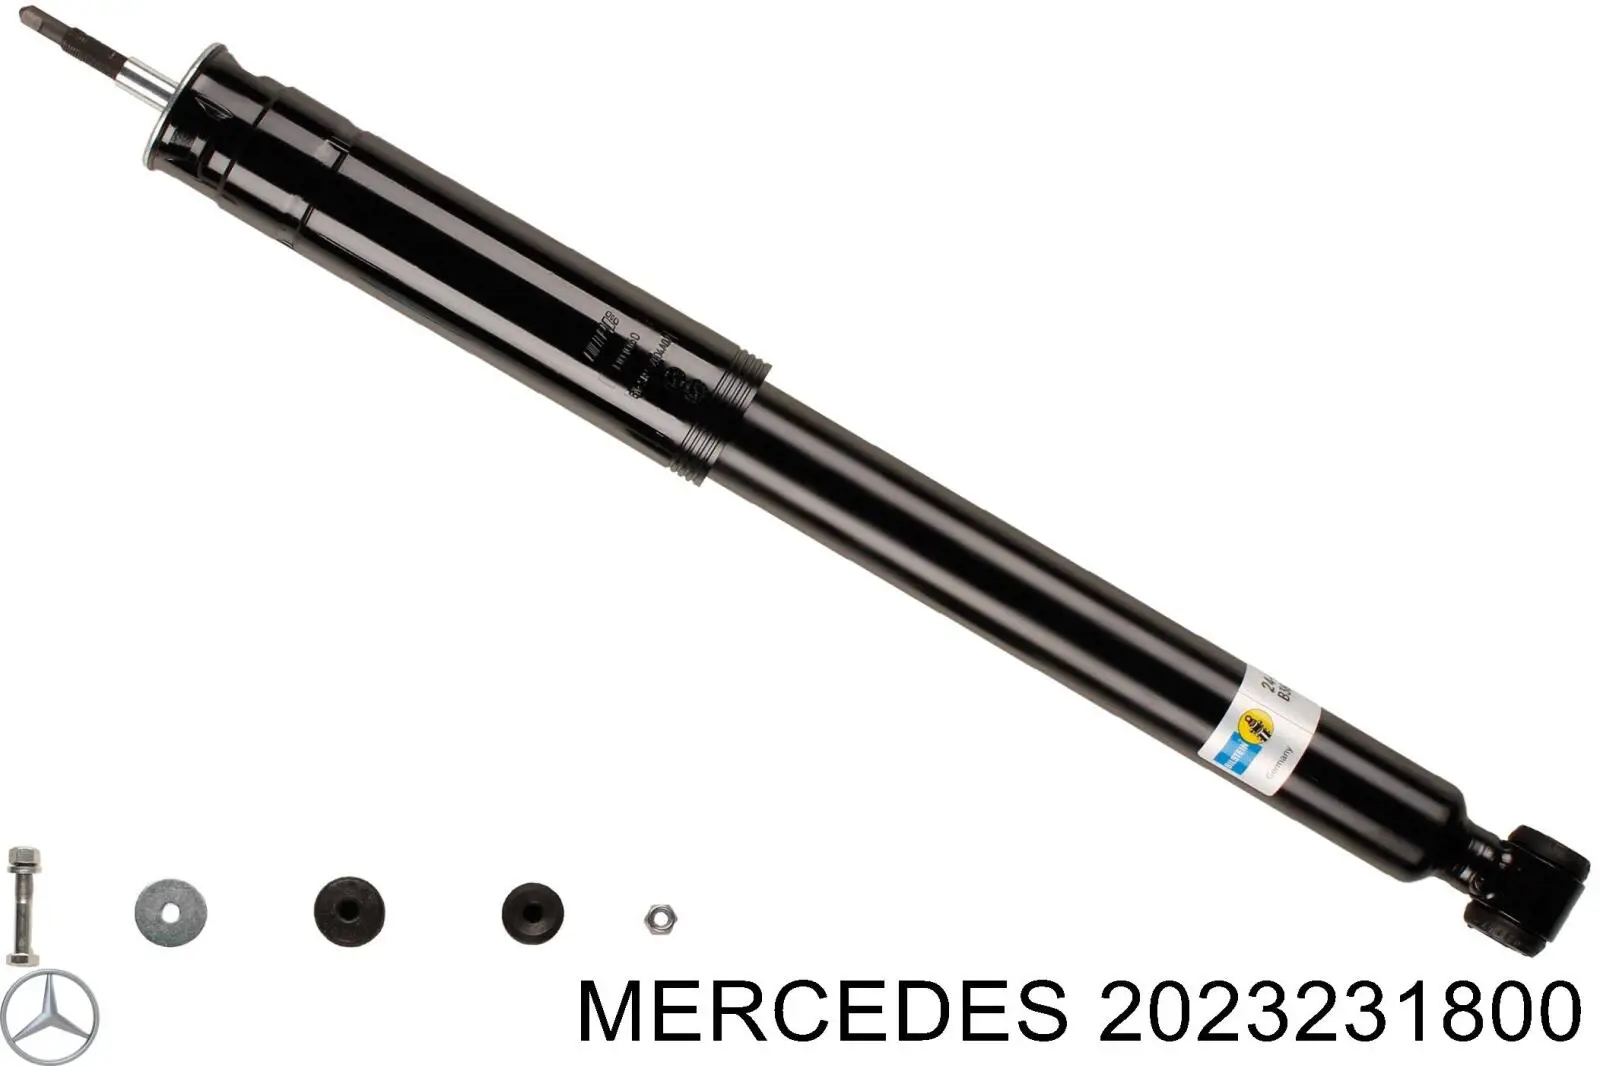 2023231800 Mercedes 